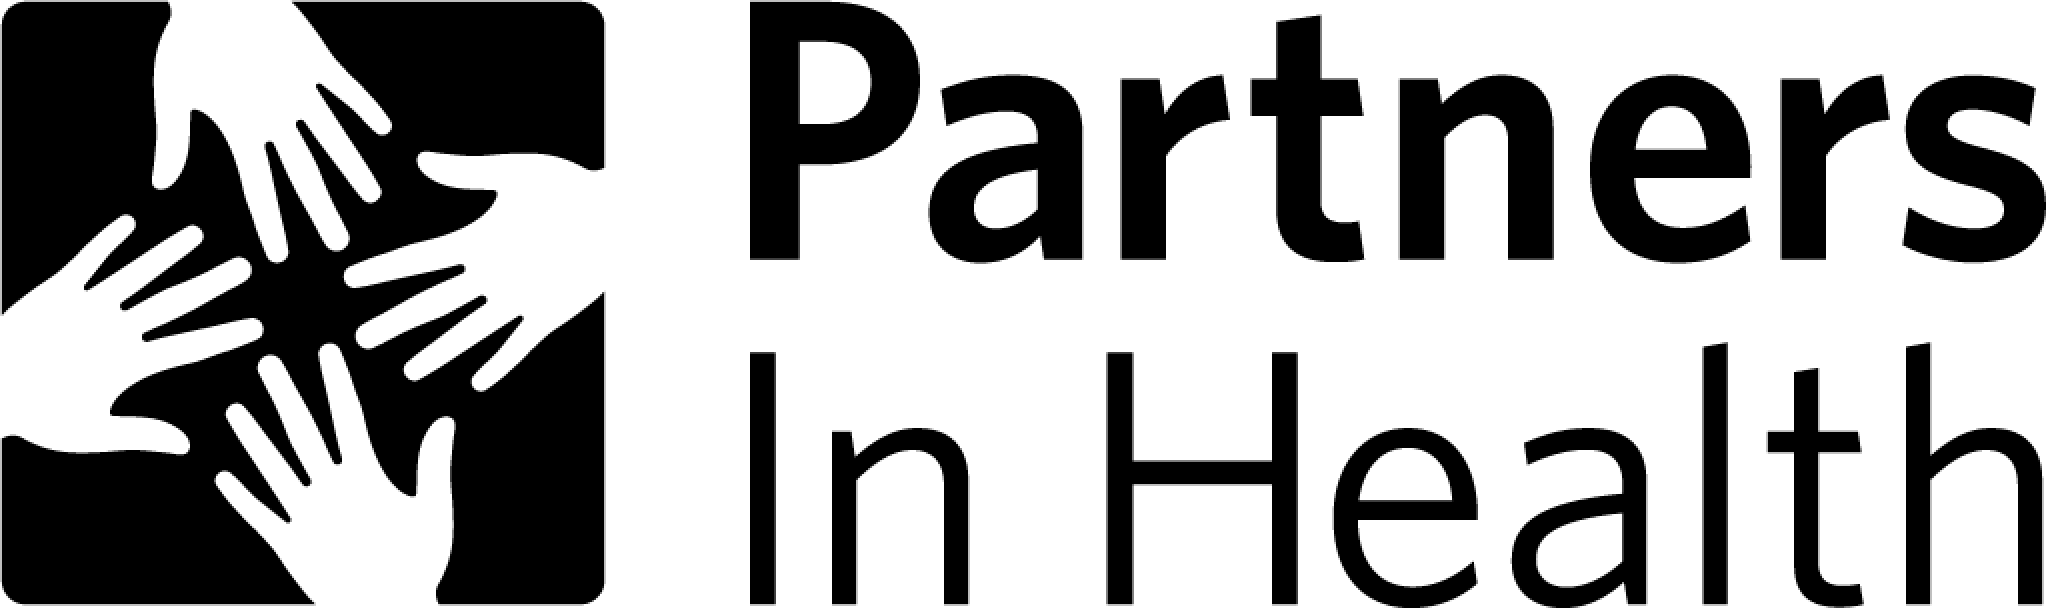 pih-logo1